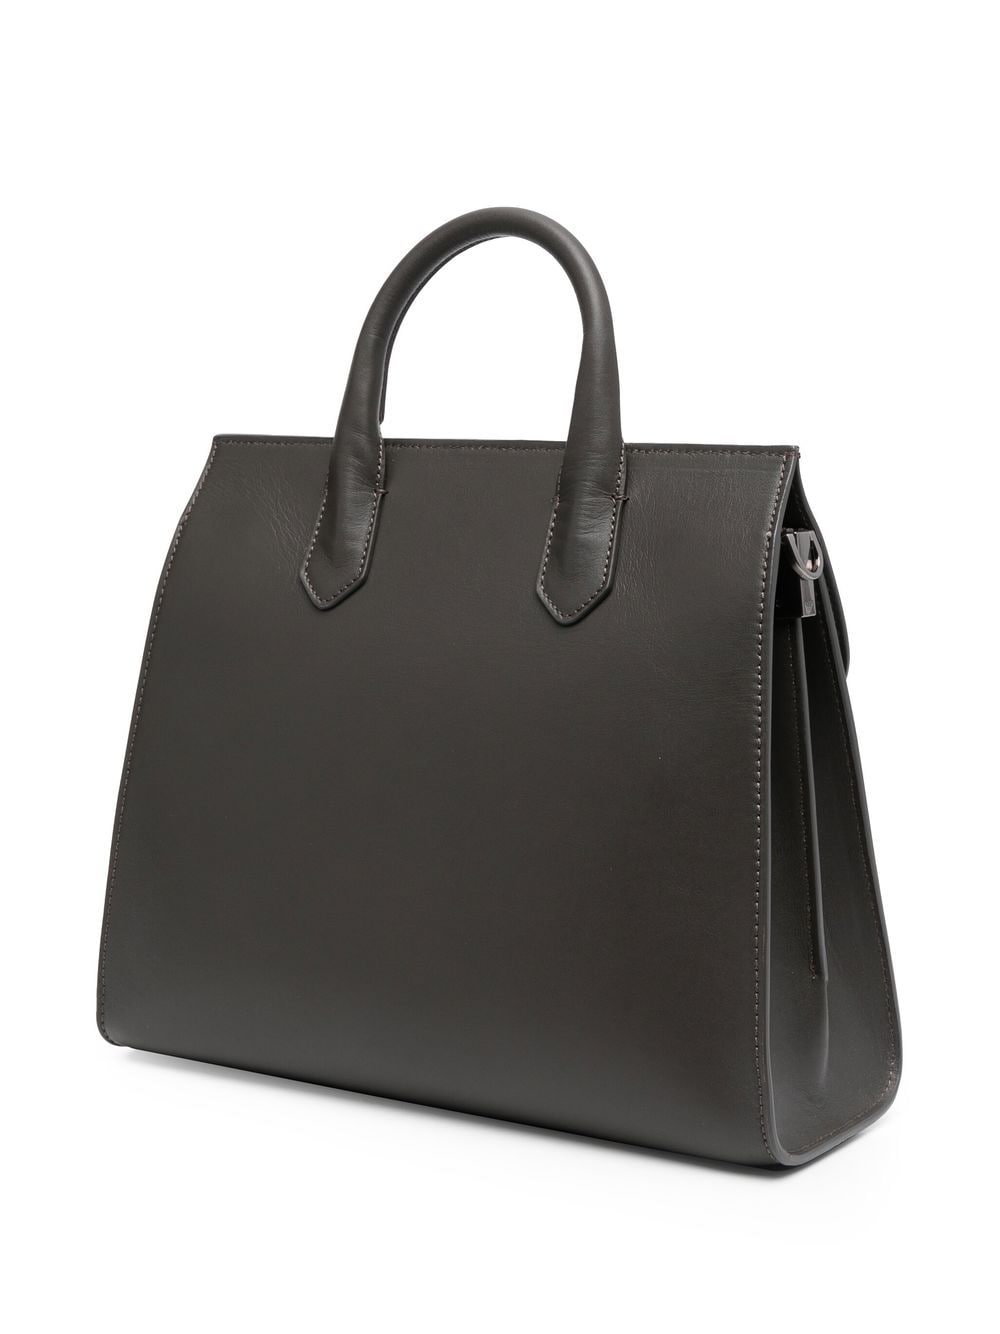 Emporio Armani top-handle Leather Tote Bag - Farfetch